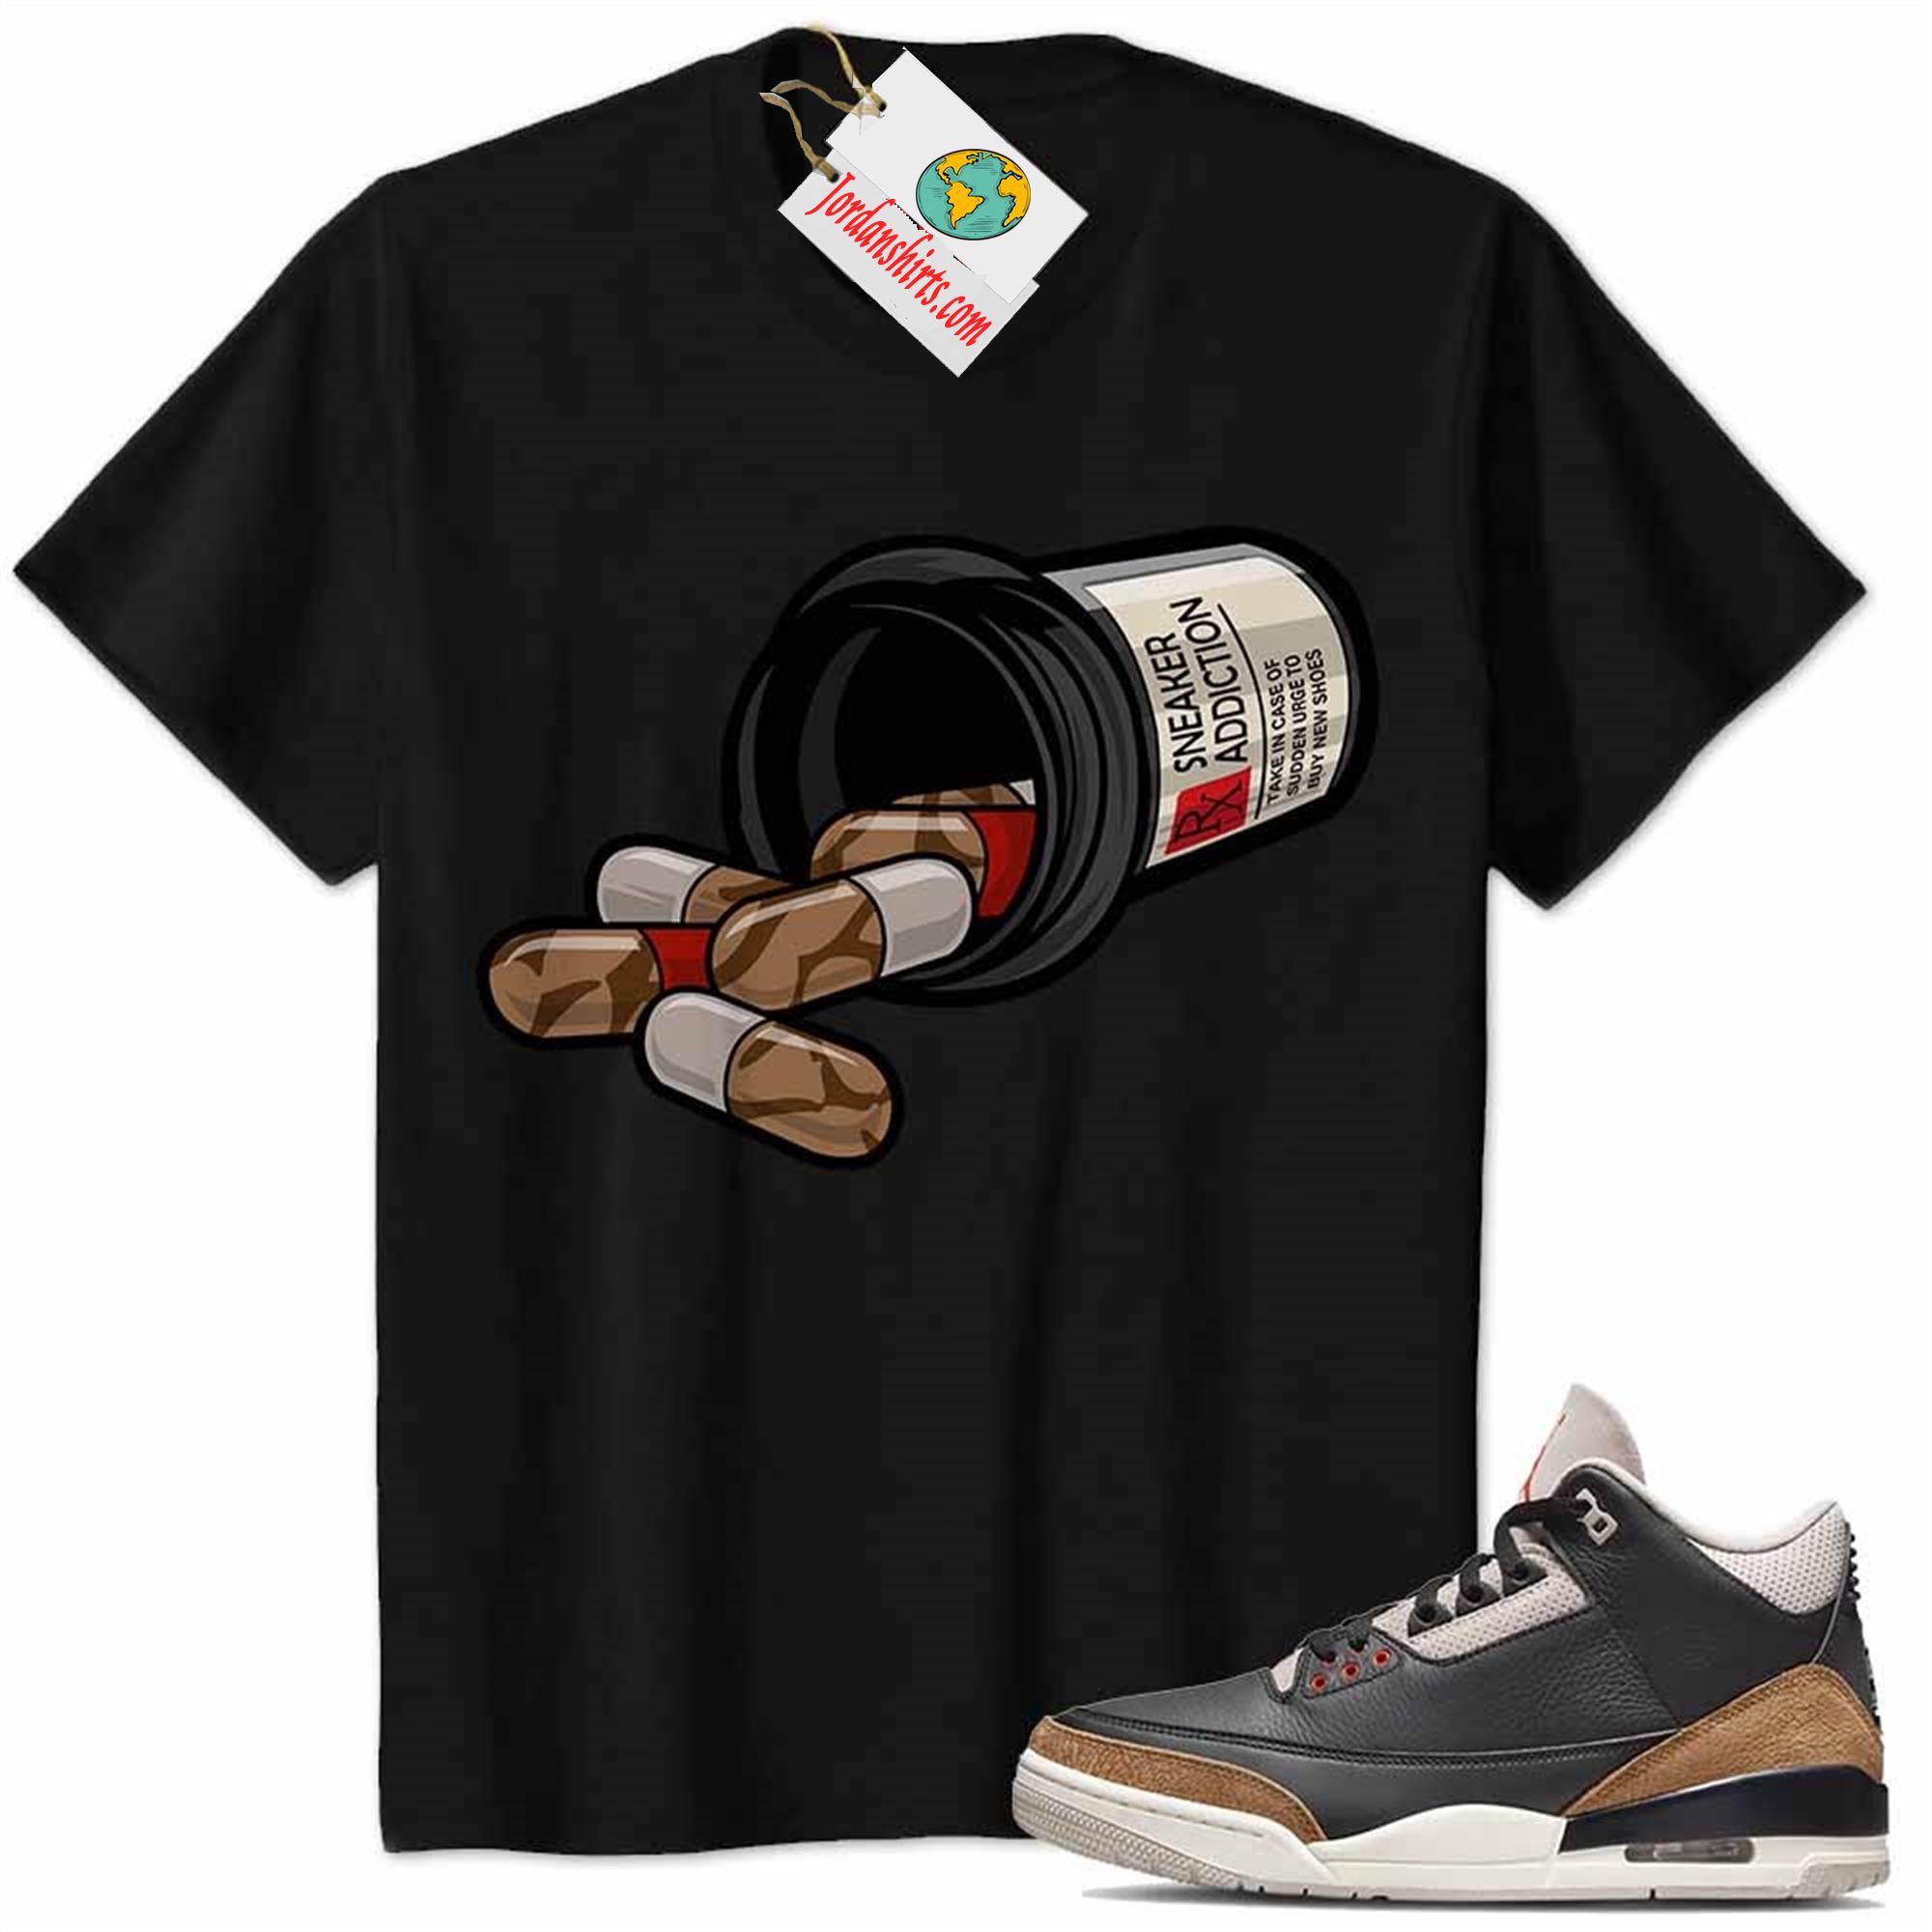 Jordan 3 Shirt, Jordan 3 Desert Elephant Shirt Shirt Rx Drugs Pill Bottle Sneaker Addiction Black Size Up To 5xl